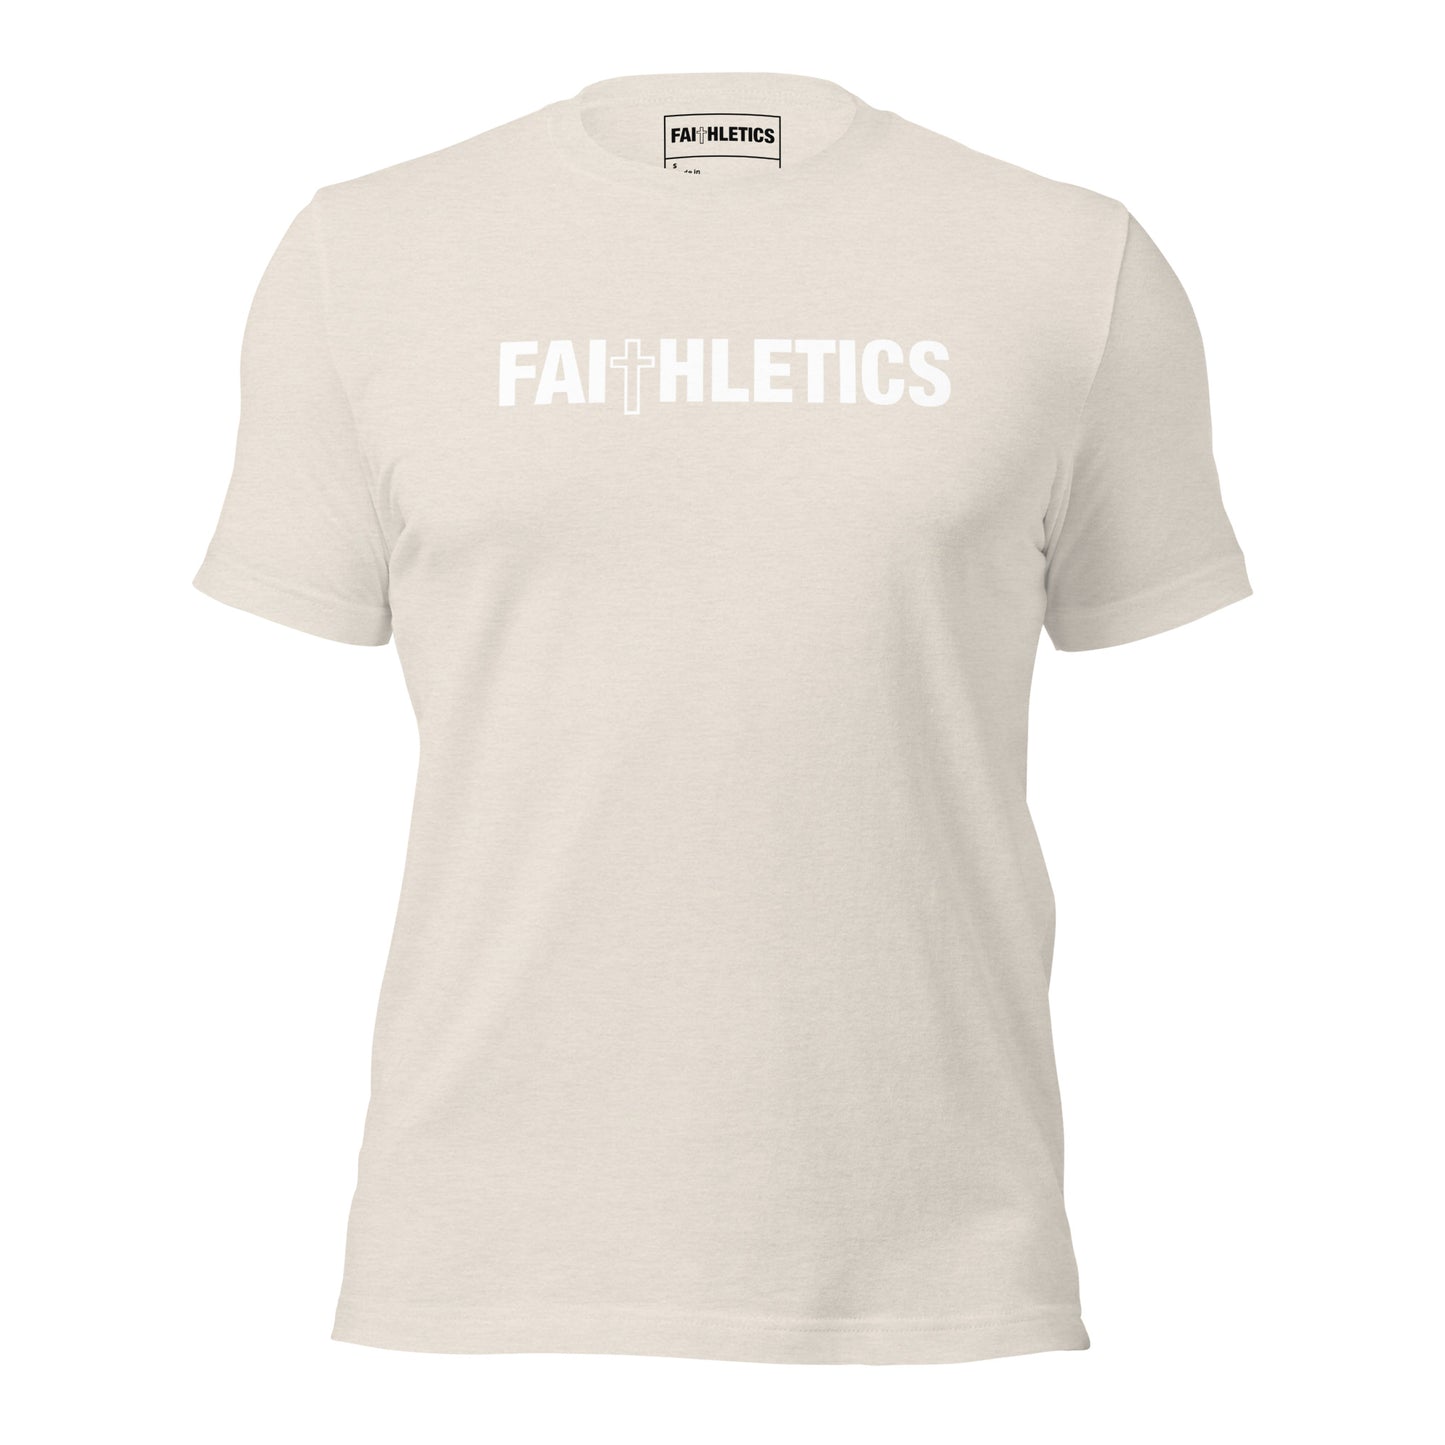 Faithletics T-Shirt